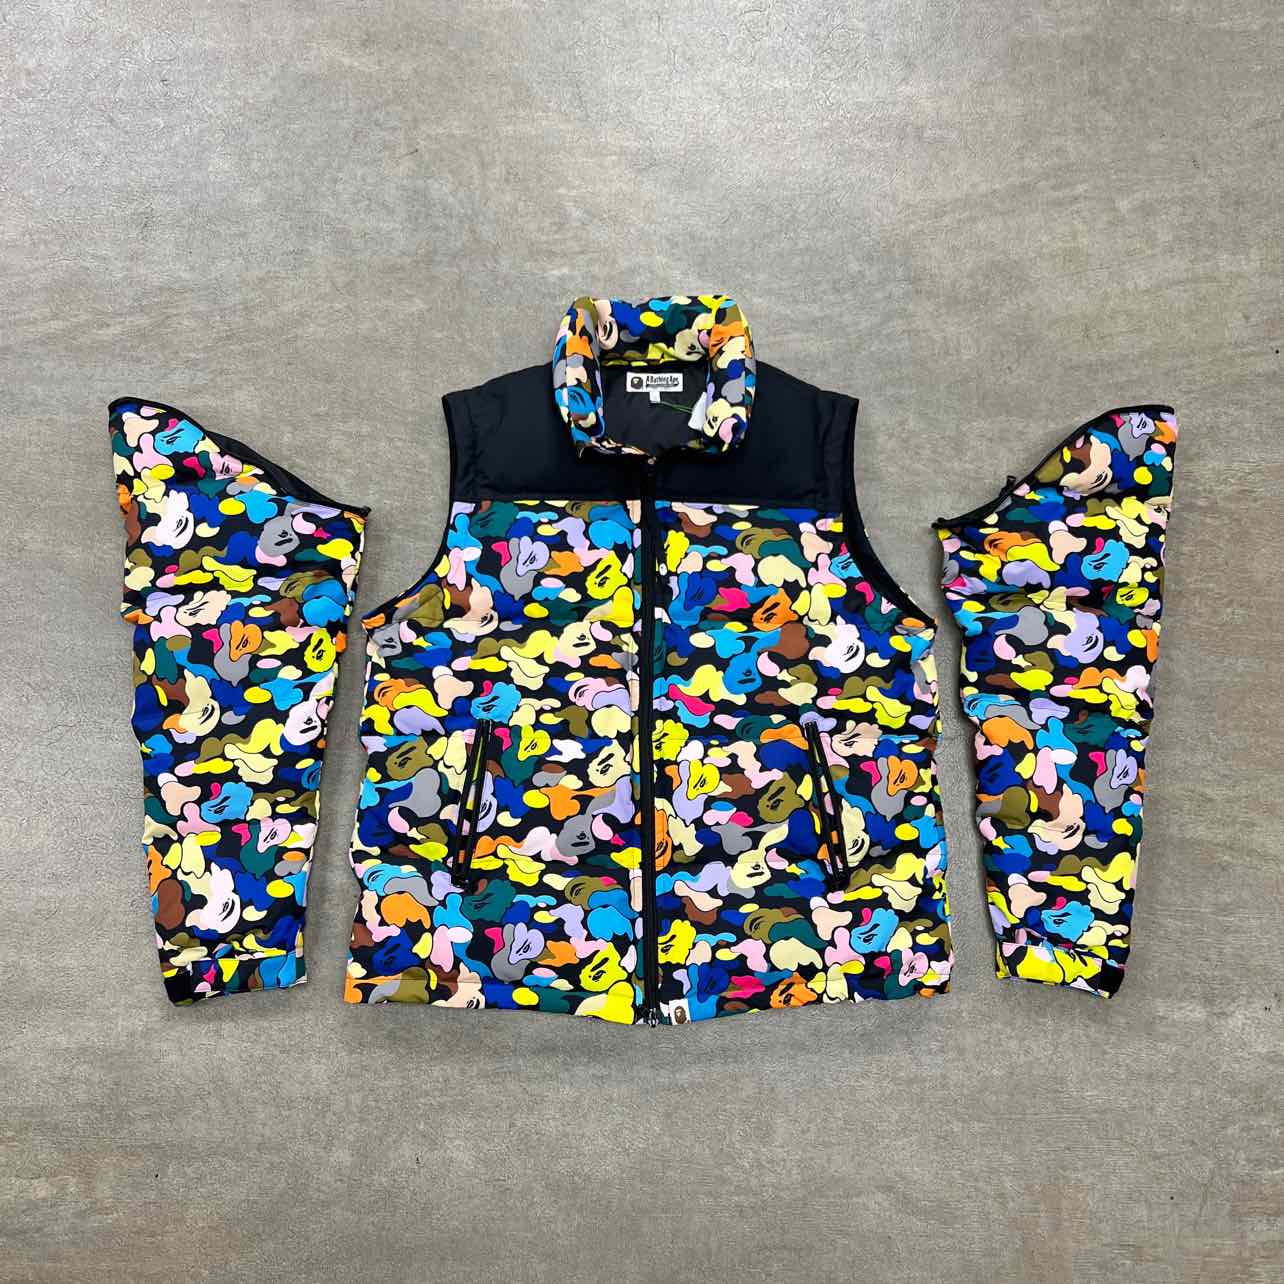 Bape Puffer Jacket "3WAY DETACHABLE" Multi-Color Used Size L